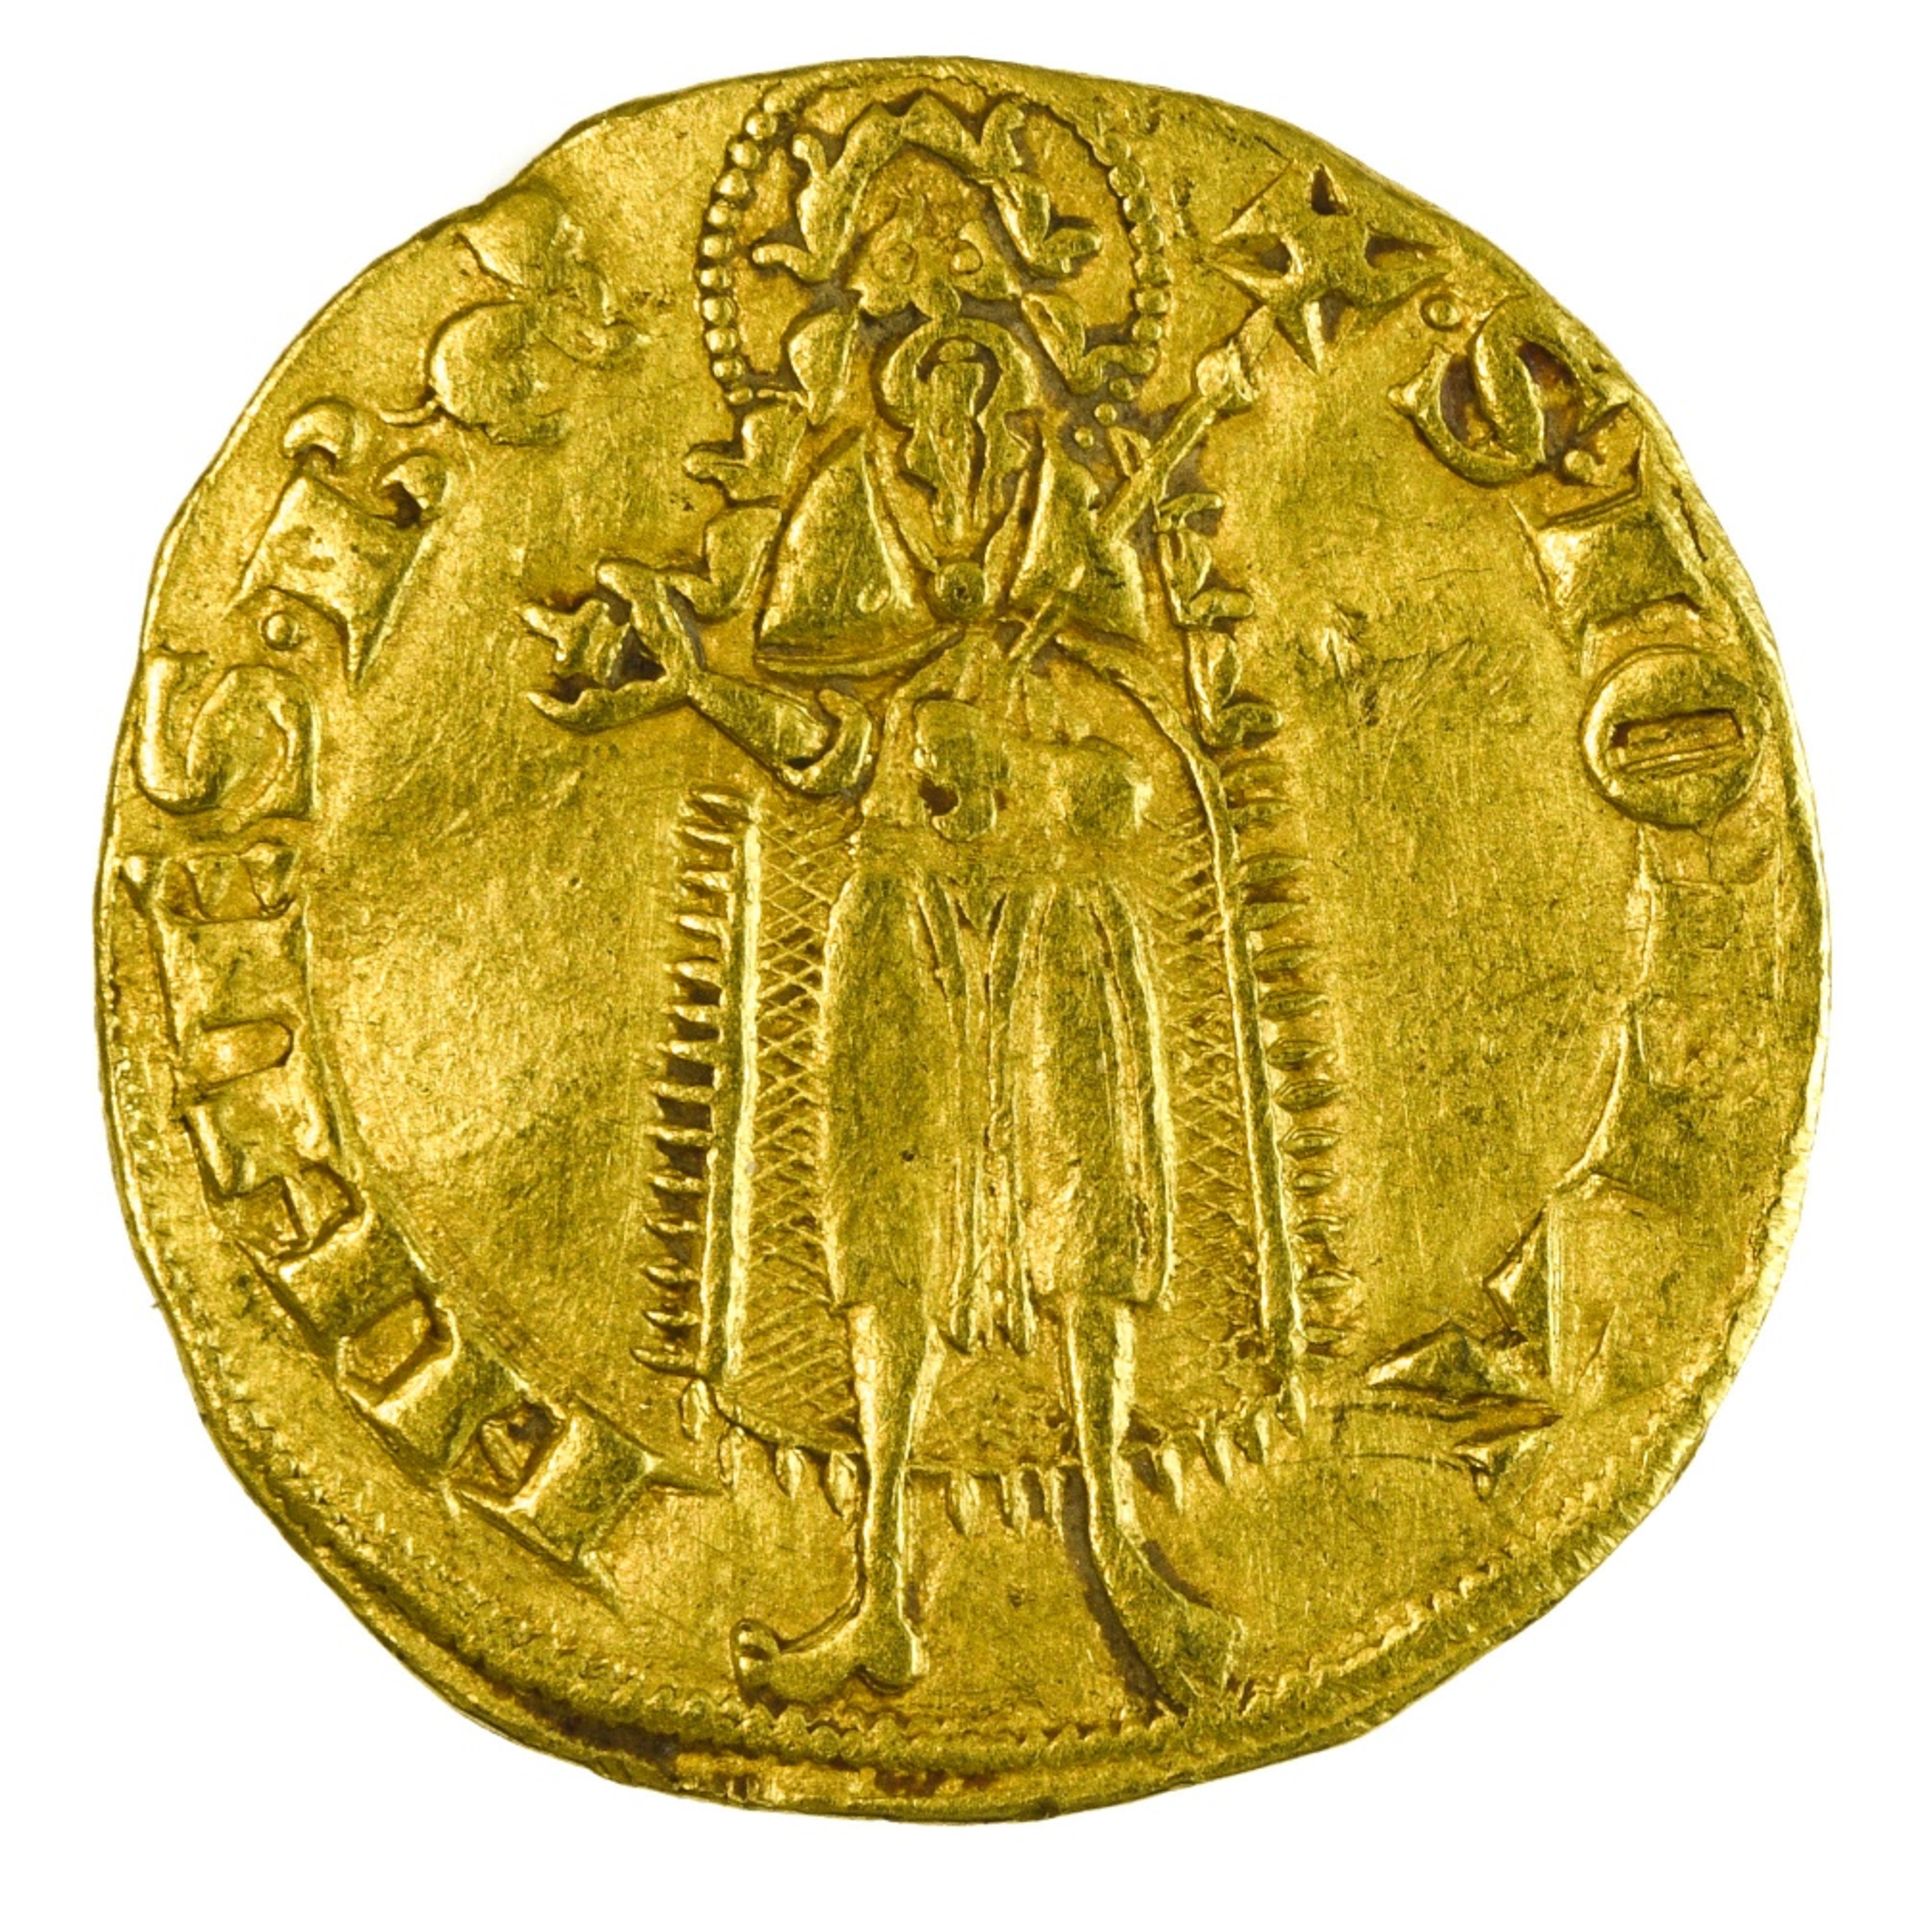 Italy, Firenze Republic (1189-1531), Florin, 3.35g, Florentine lys, +FLOR. ENTIA., rev. Saint John - Image 2 of 2